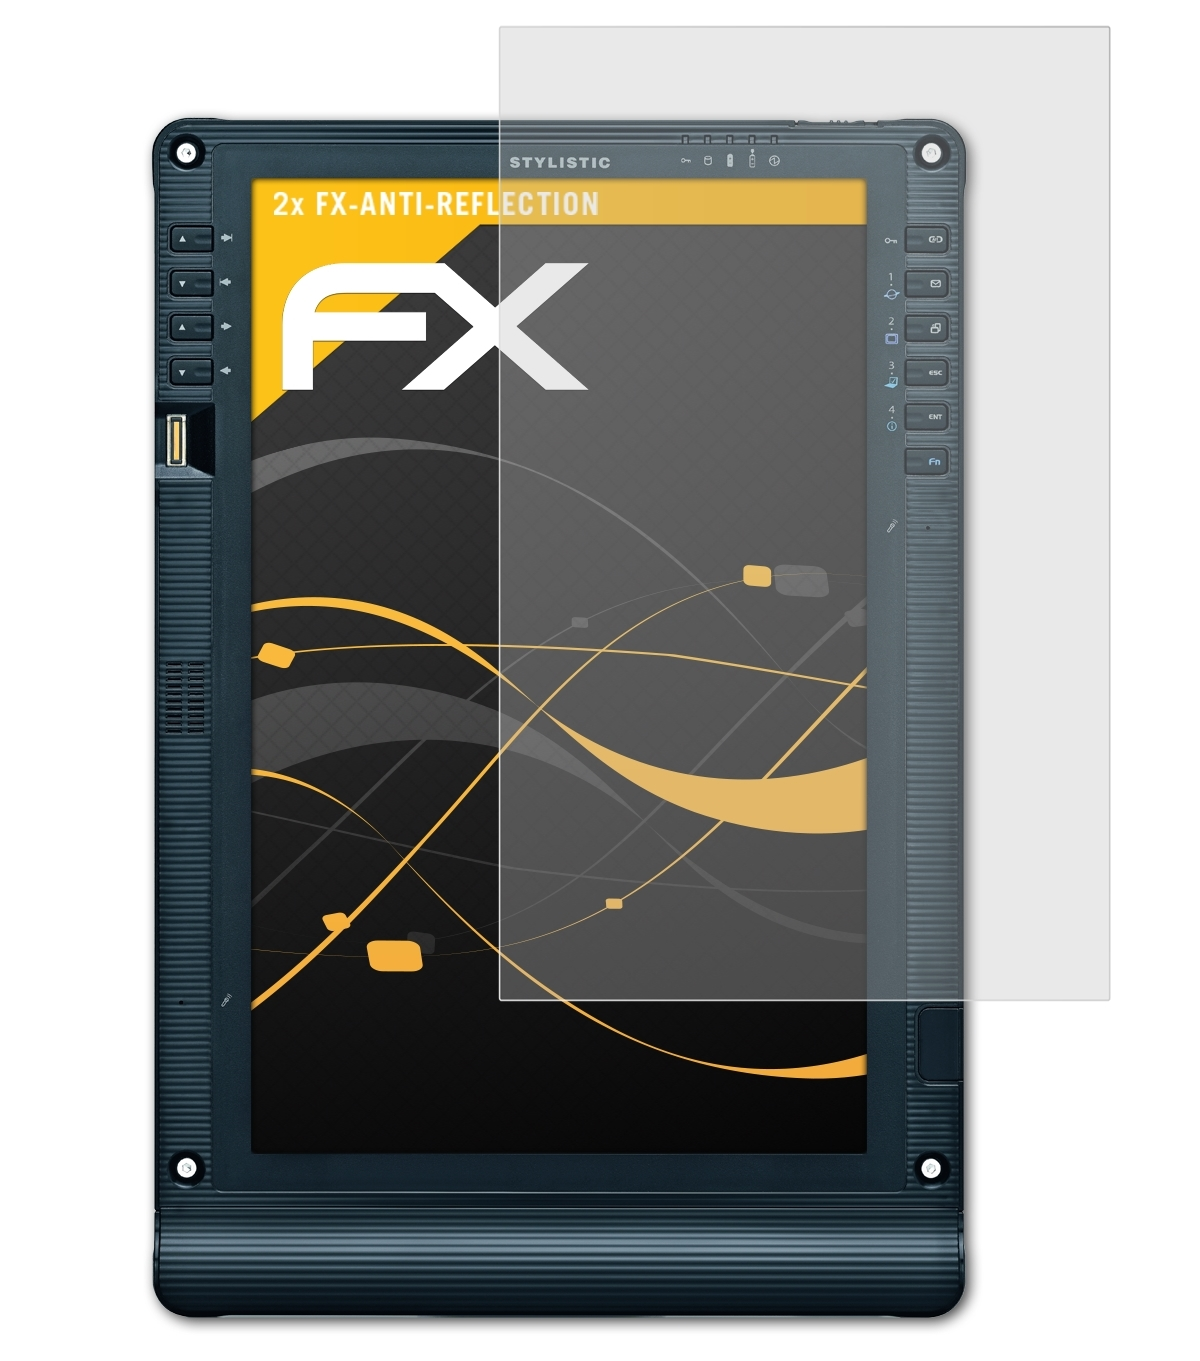 2x Displayschutz(für ST6012) ATFOLIX Stylistic Fujitsu FX-Antireflex